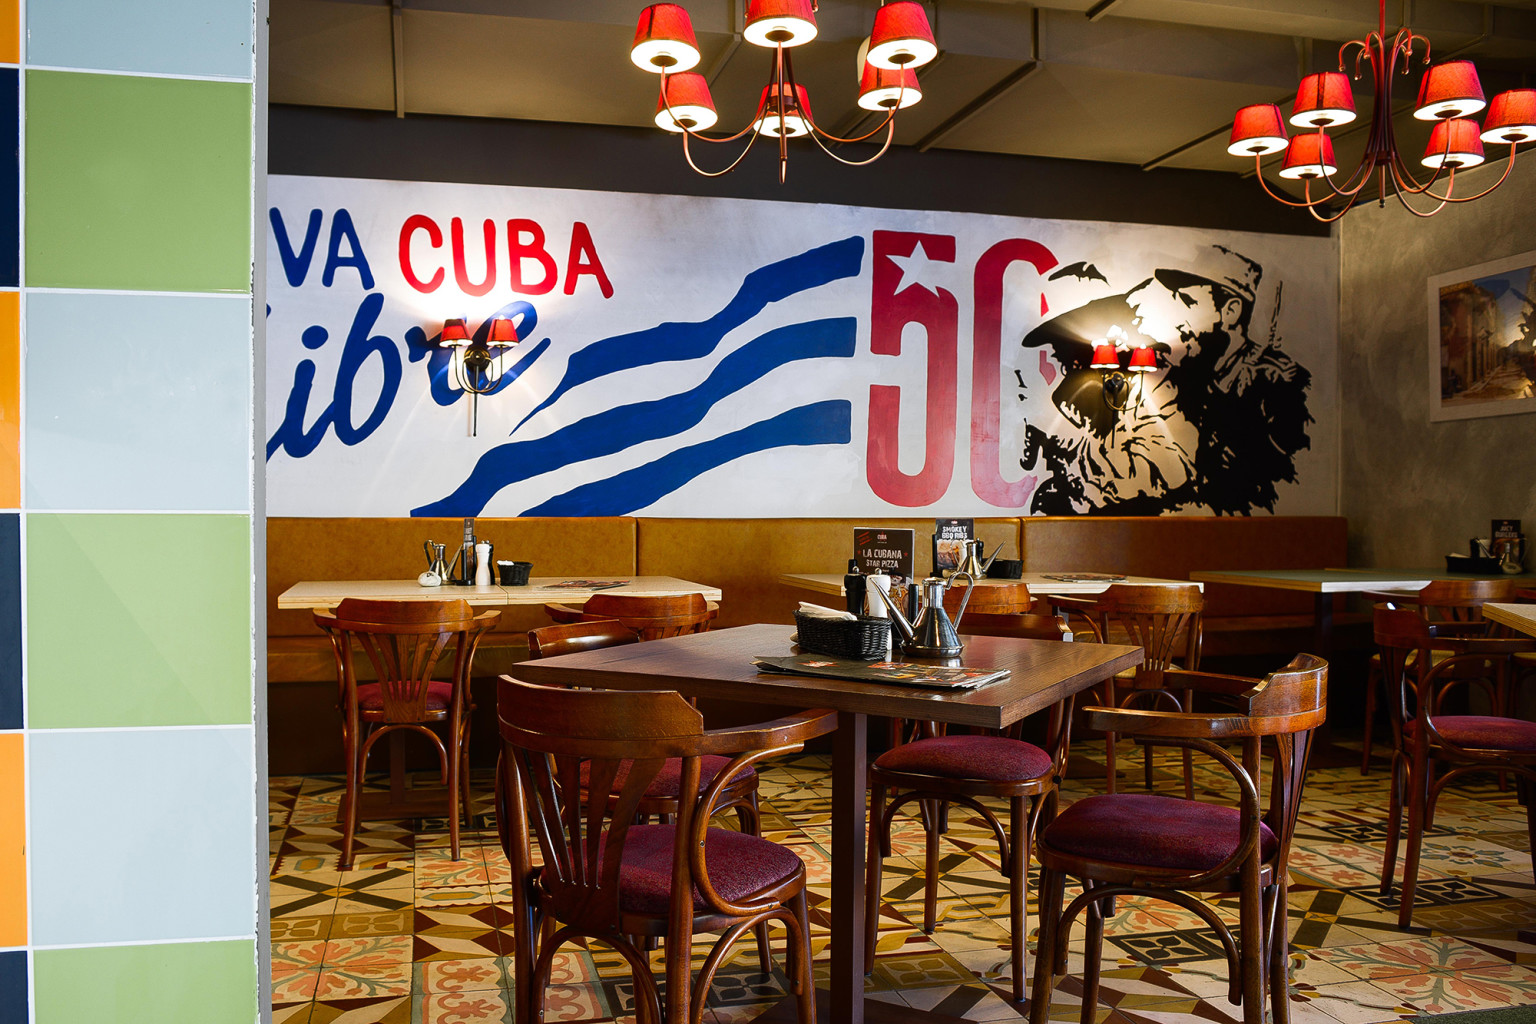 Кафе куба отзывы. Кафе в кубинском стиле. Интерьер кафе в кубинском стиле. Кафе Куба. Бар в кубинском стиле.